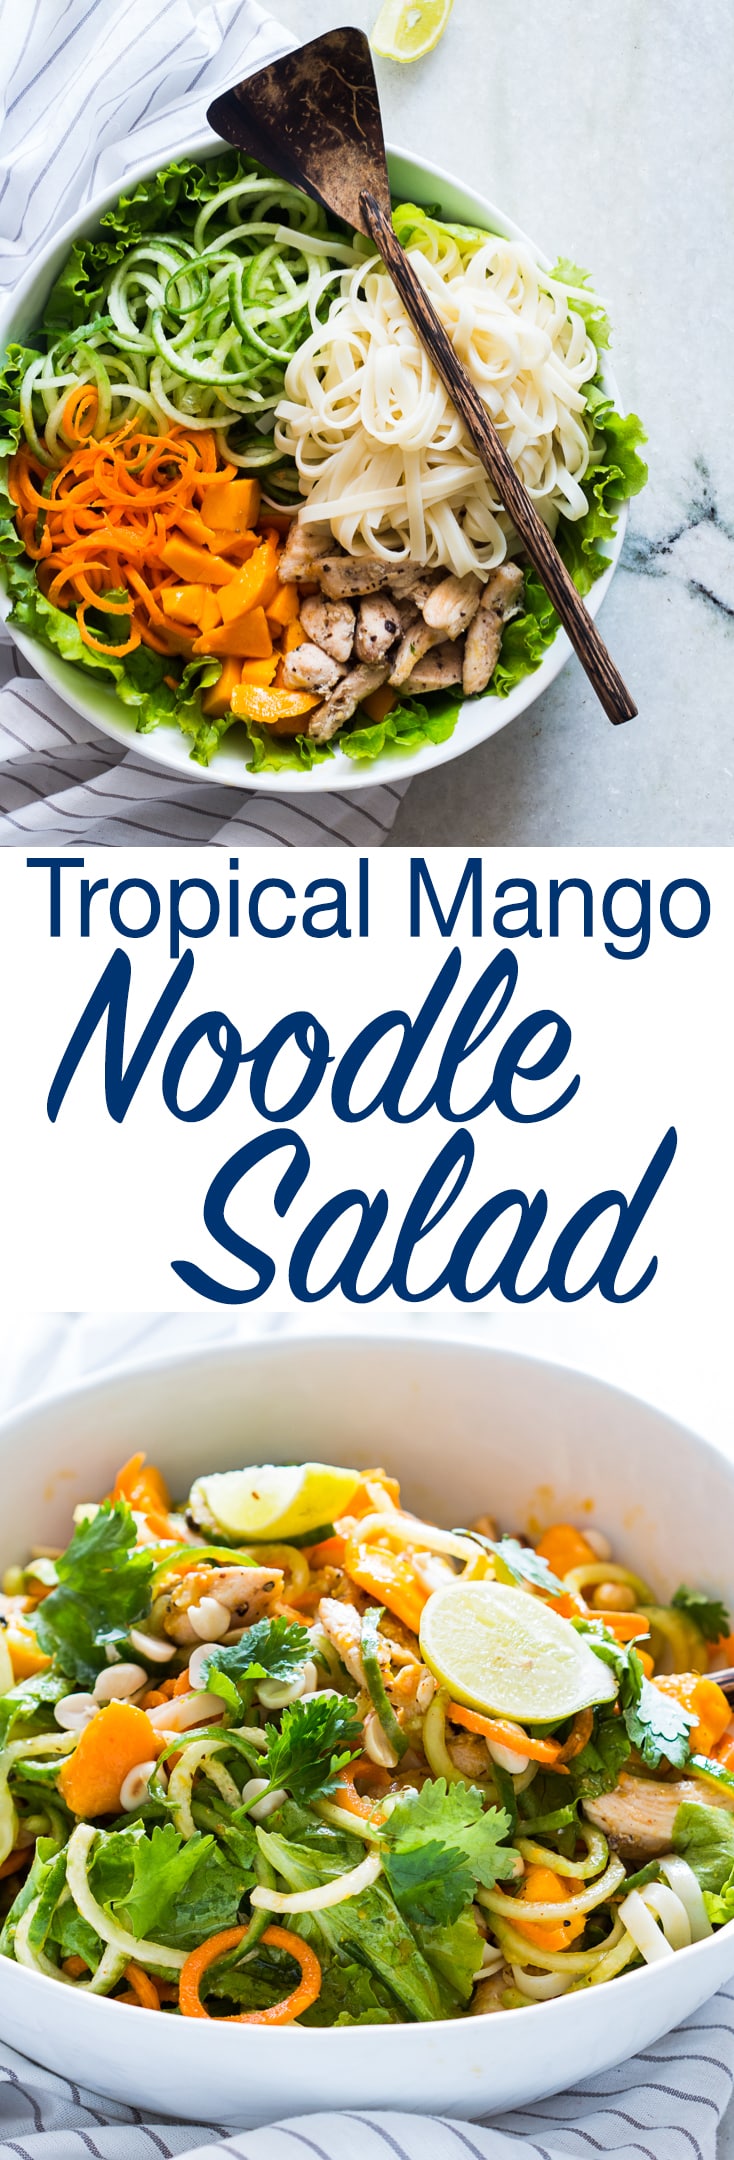 Tropical Mango Noodle Salad